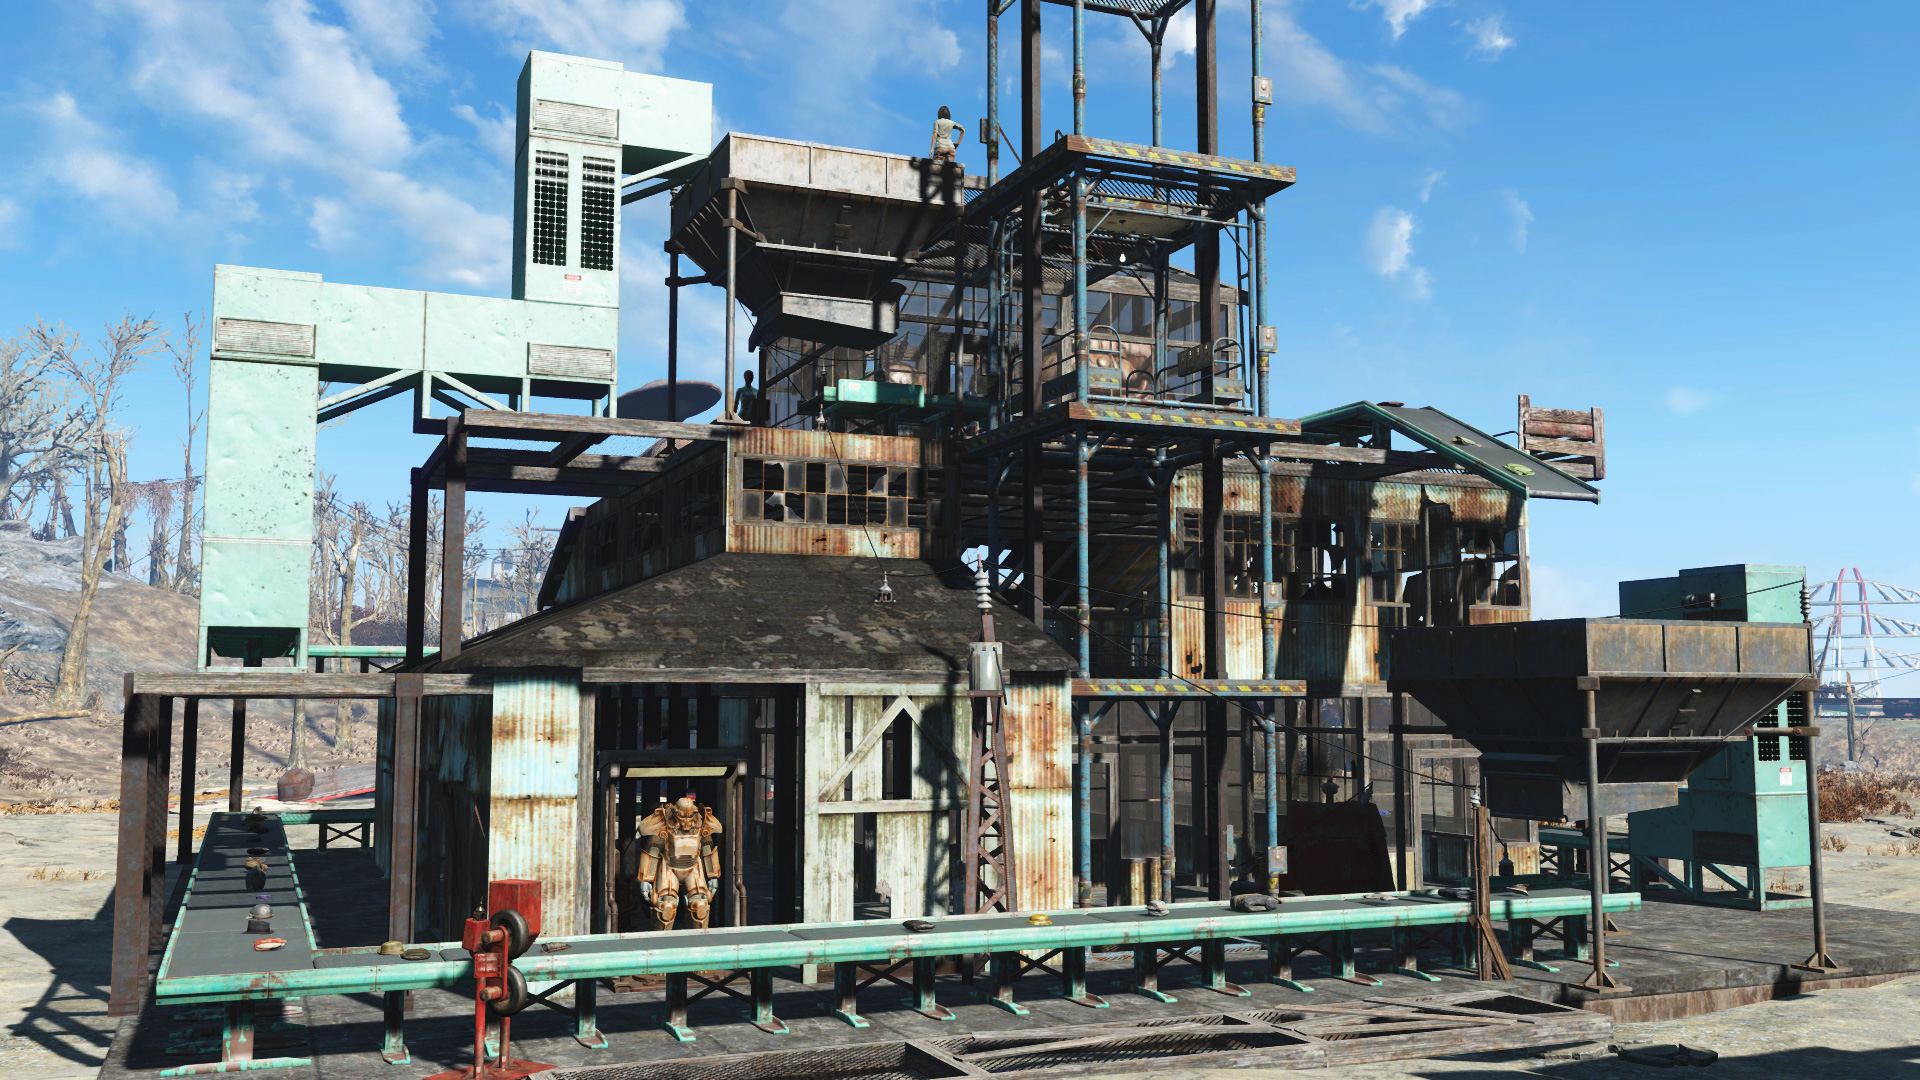 Fallout 4 - Contraptions Workshop